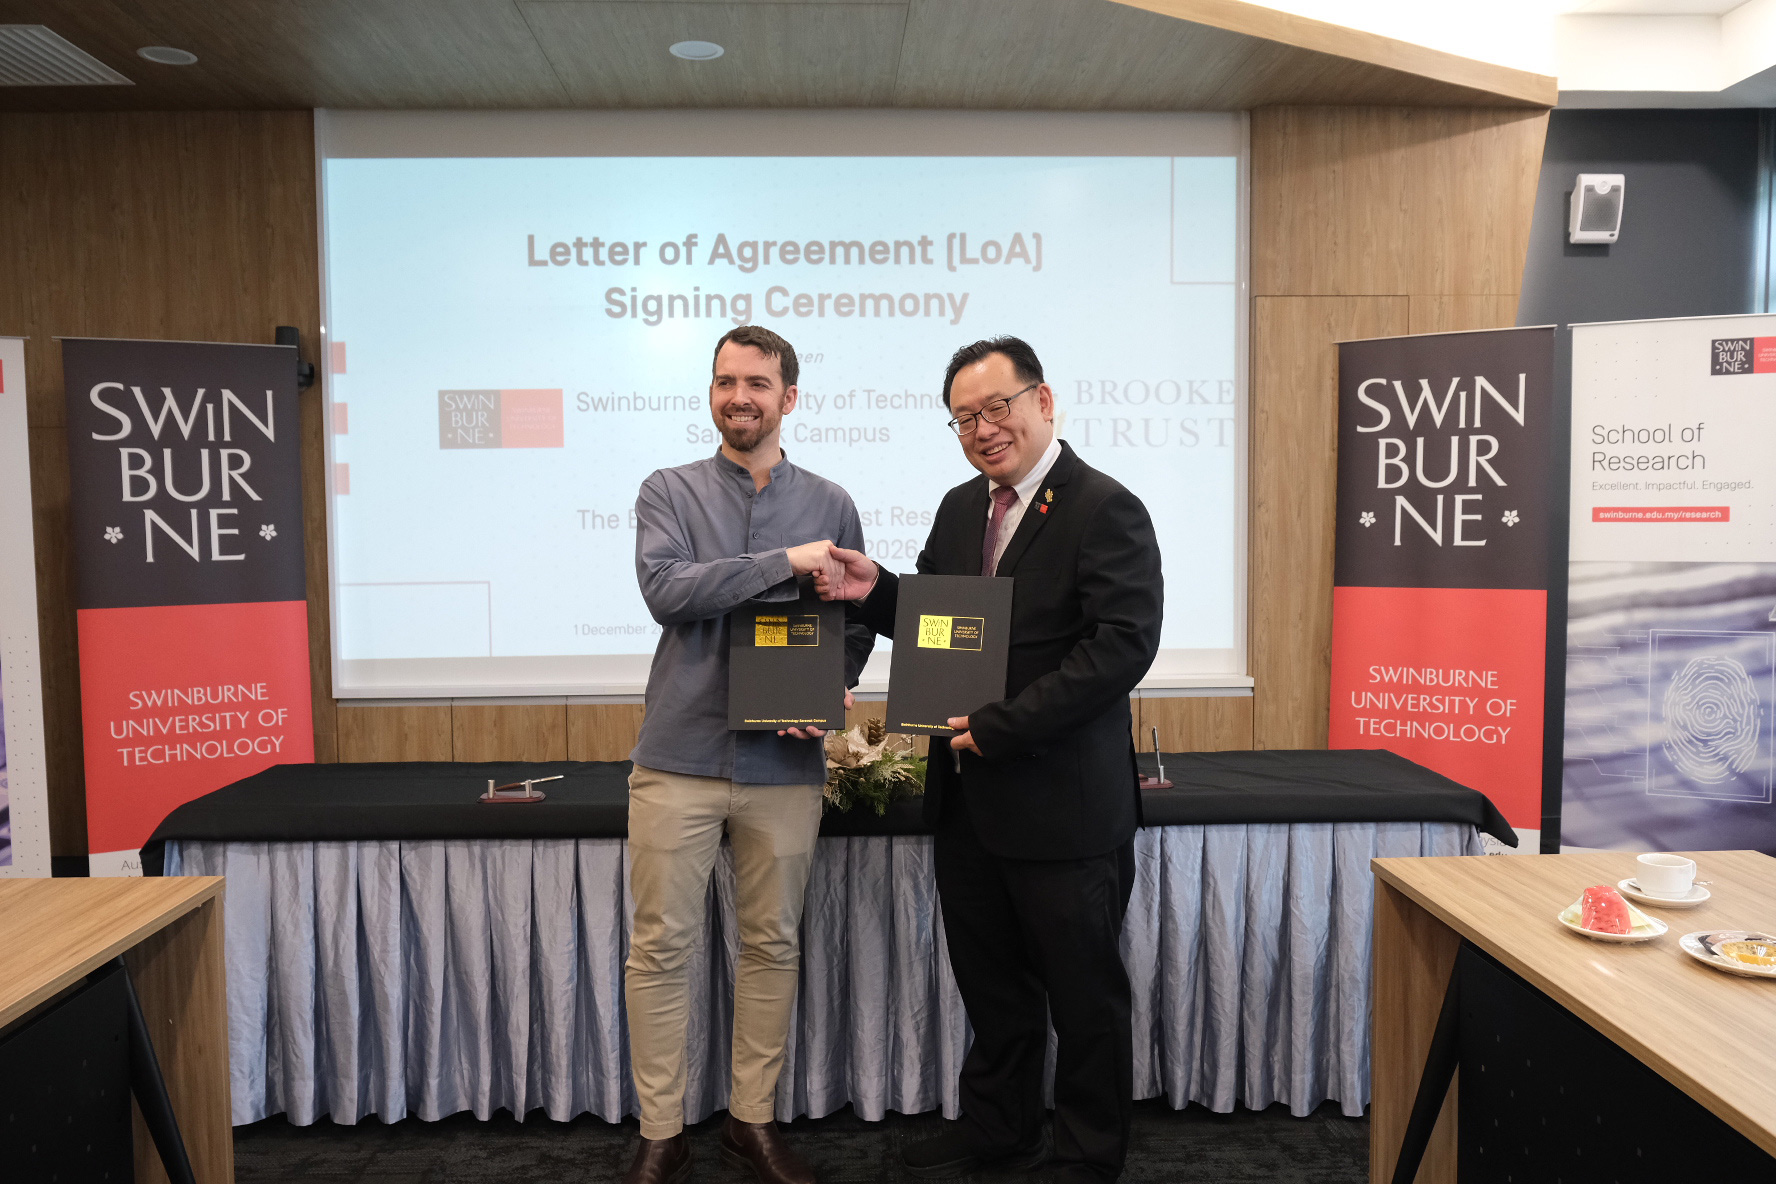 Mr Jason Brooke (left) and Ir Professor Lau Hieng Ho hold up the signed LoA.